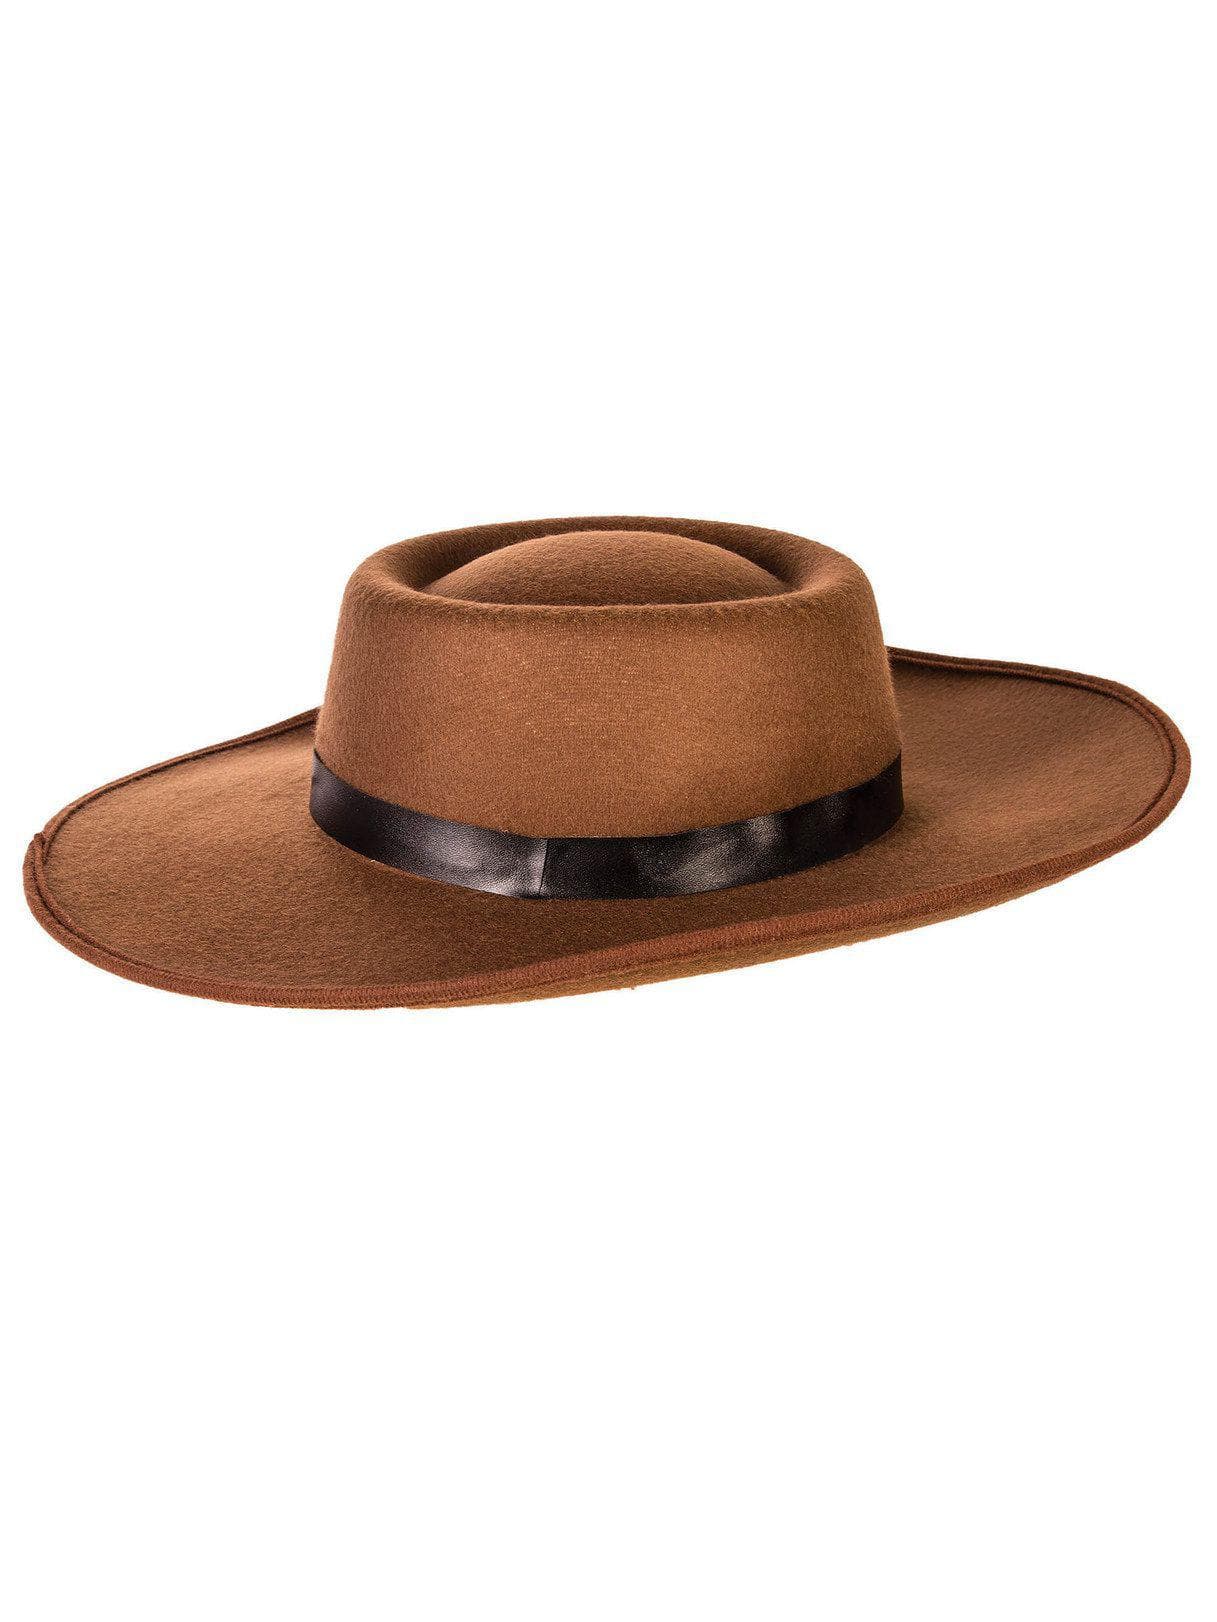 Western Hat - costumes.com